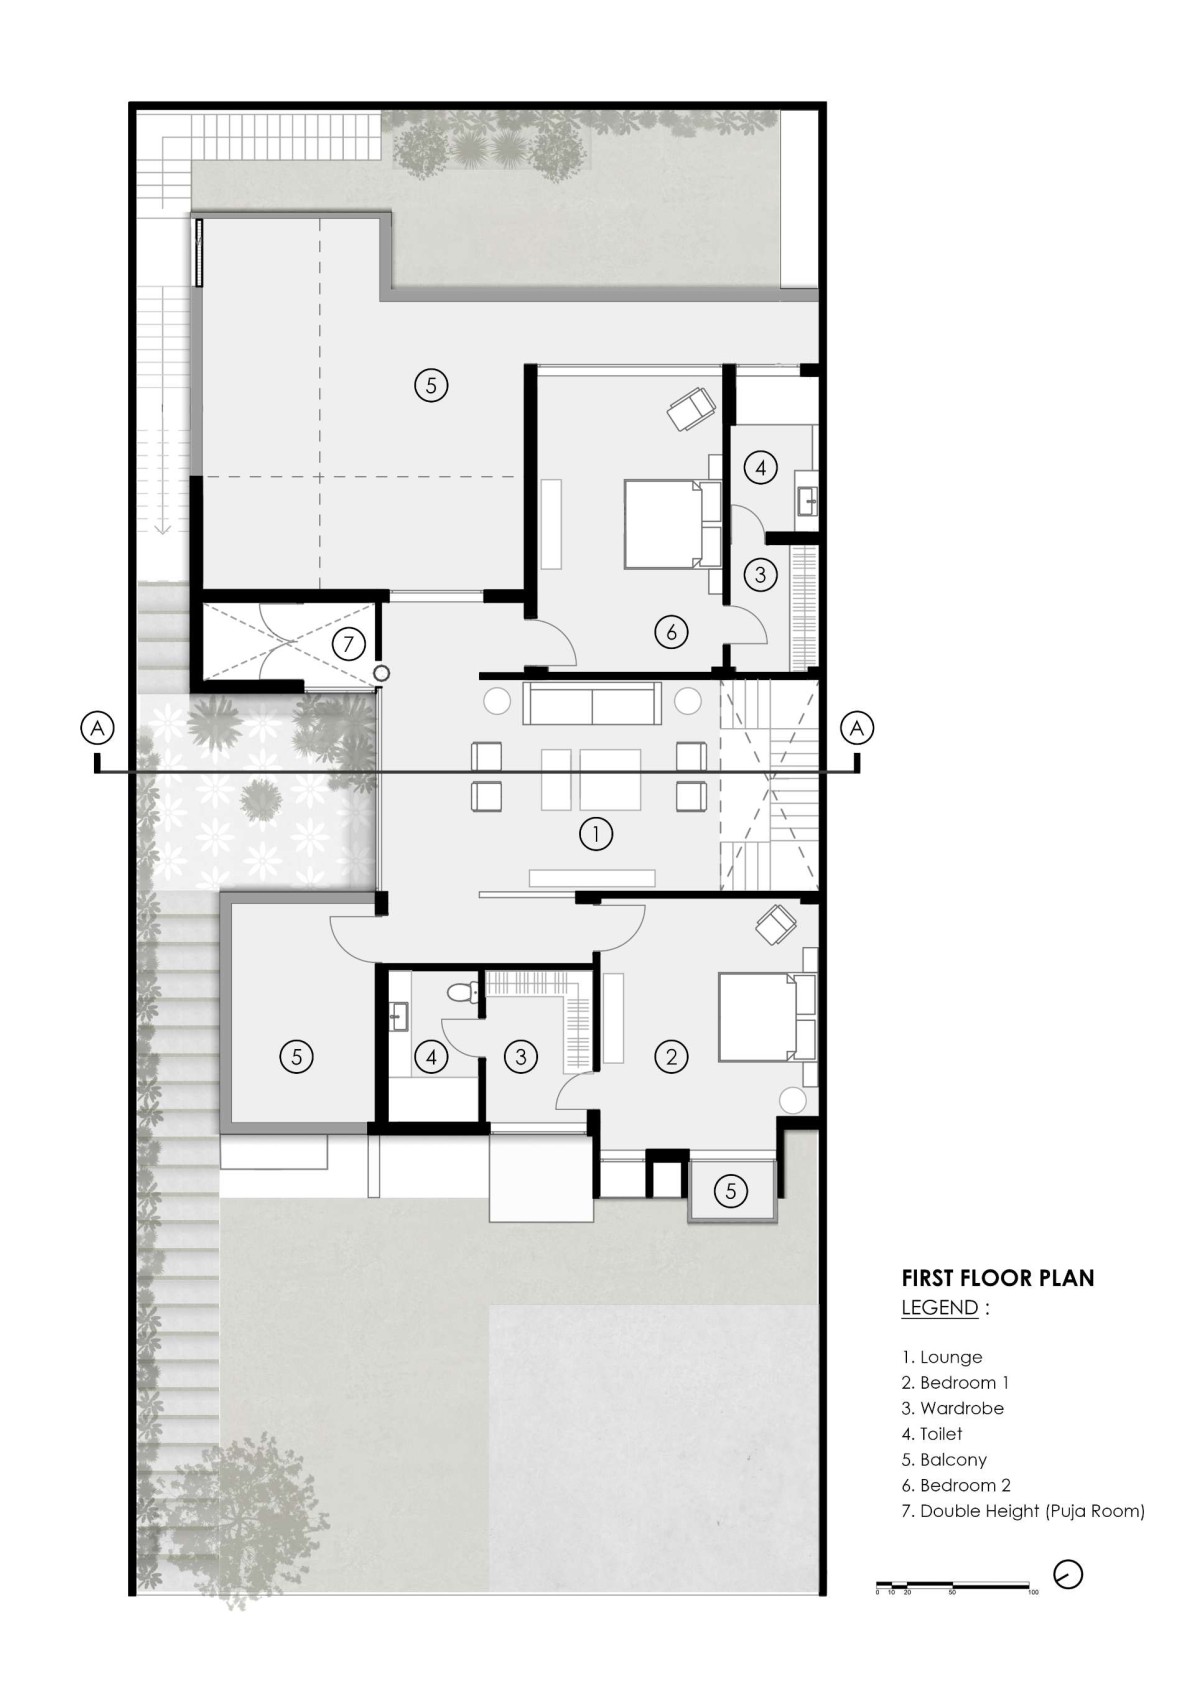 First Floor Plan of House One891 by Studio Vasaka